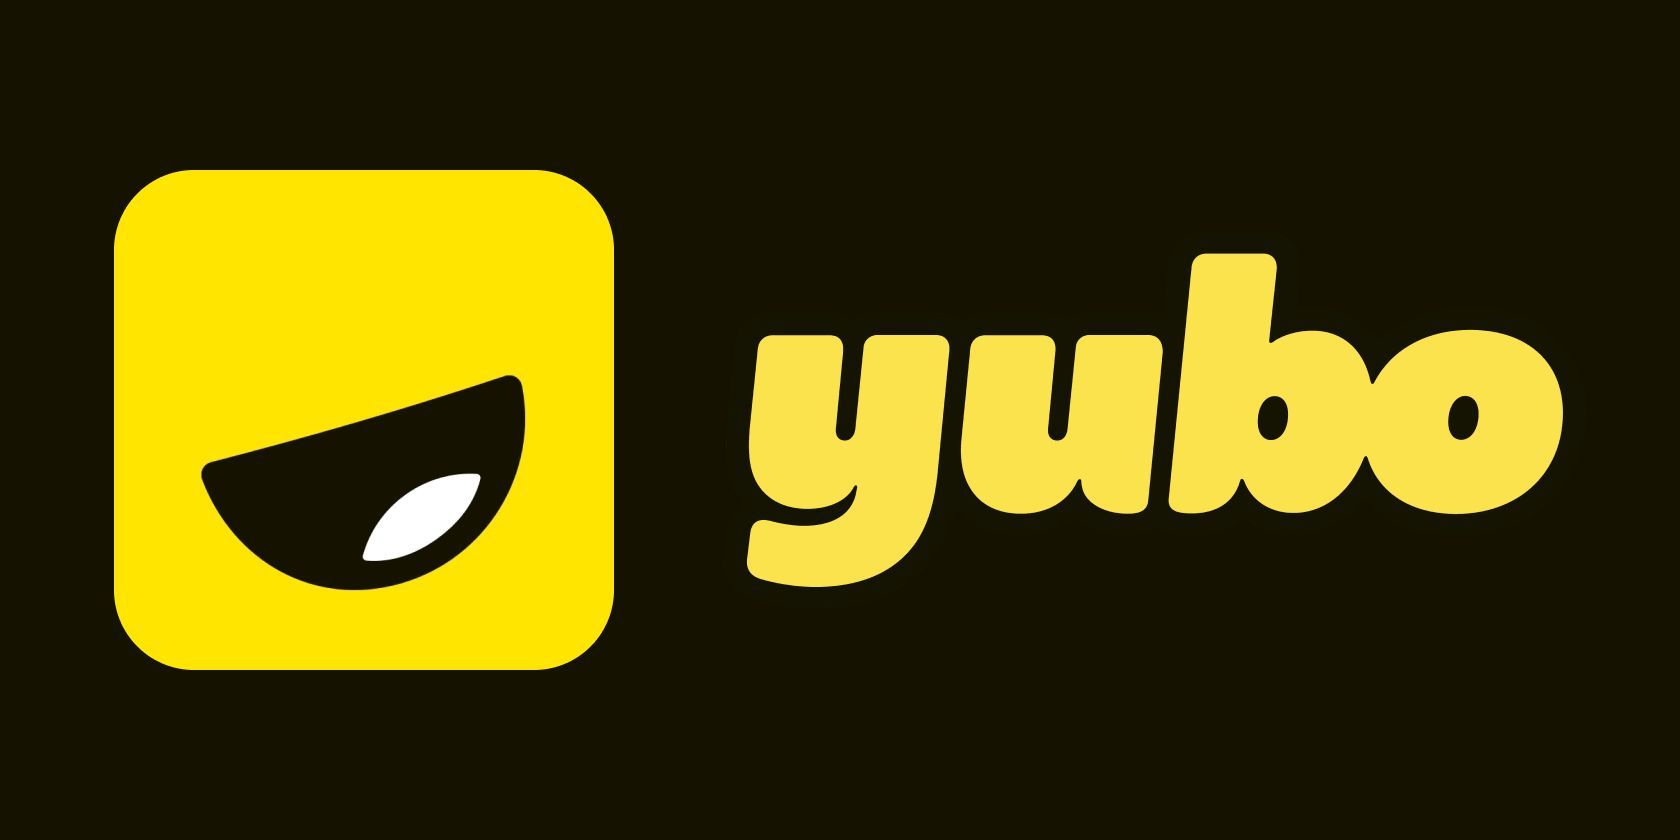 Yubo app logo